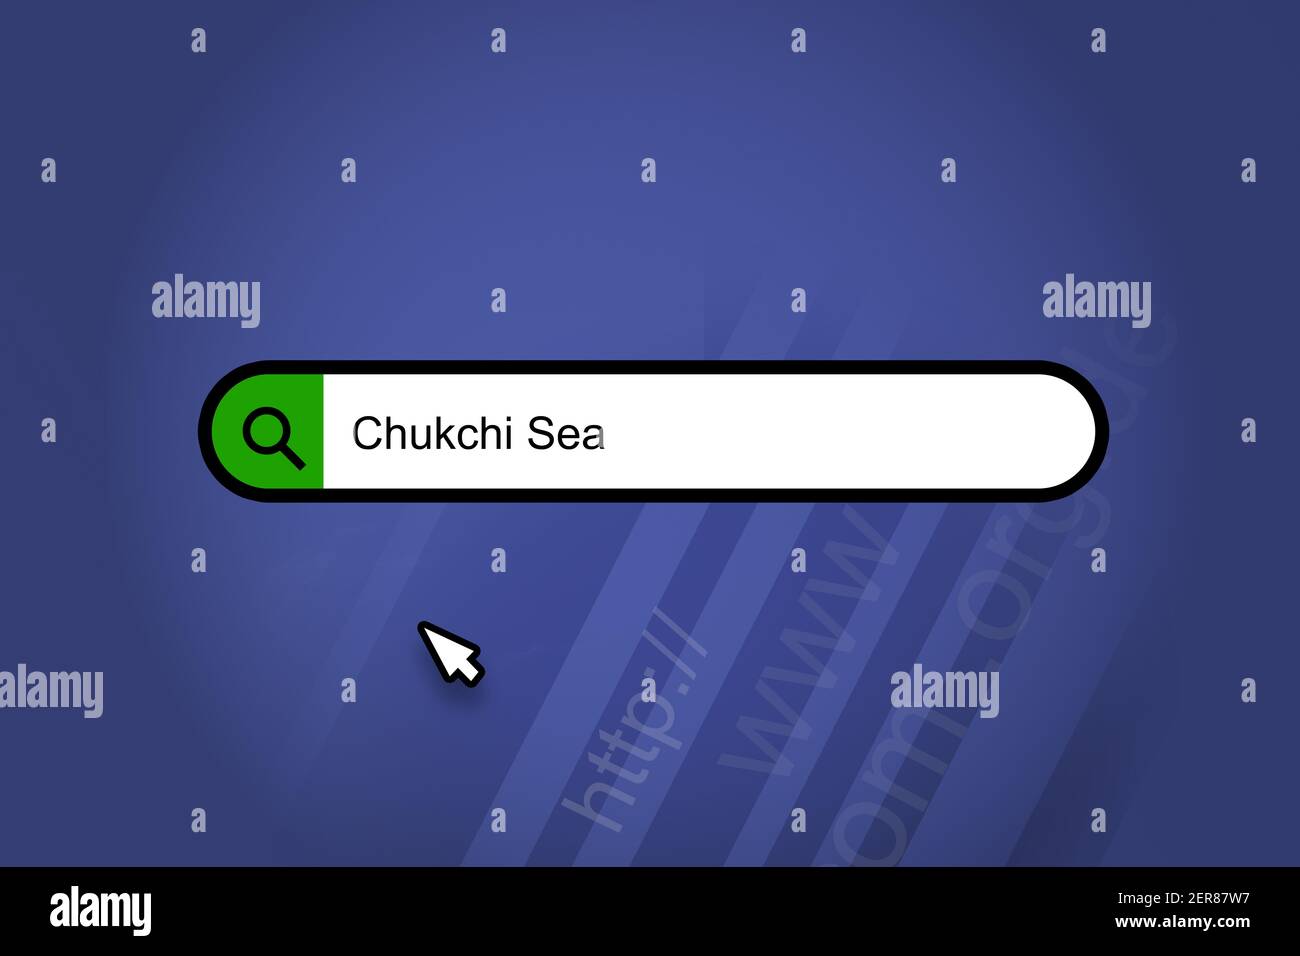 Chukchi Sea - moteur de recherche, barre de recherche avec fond bleu Banque D'Images